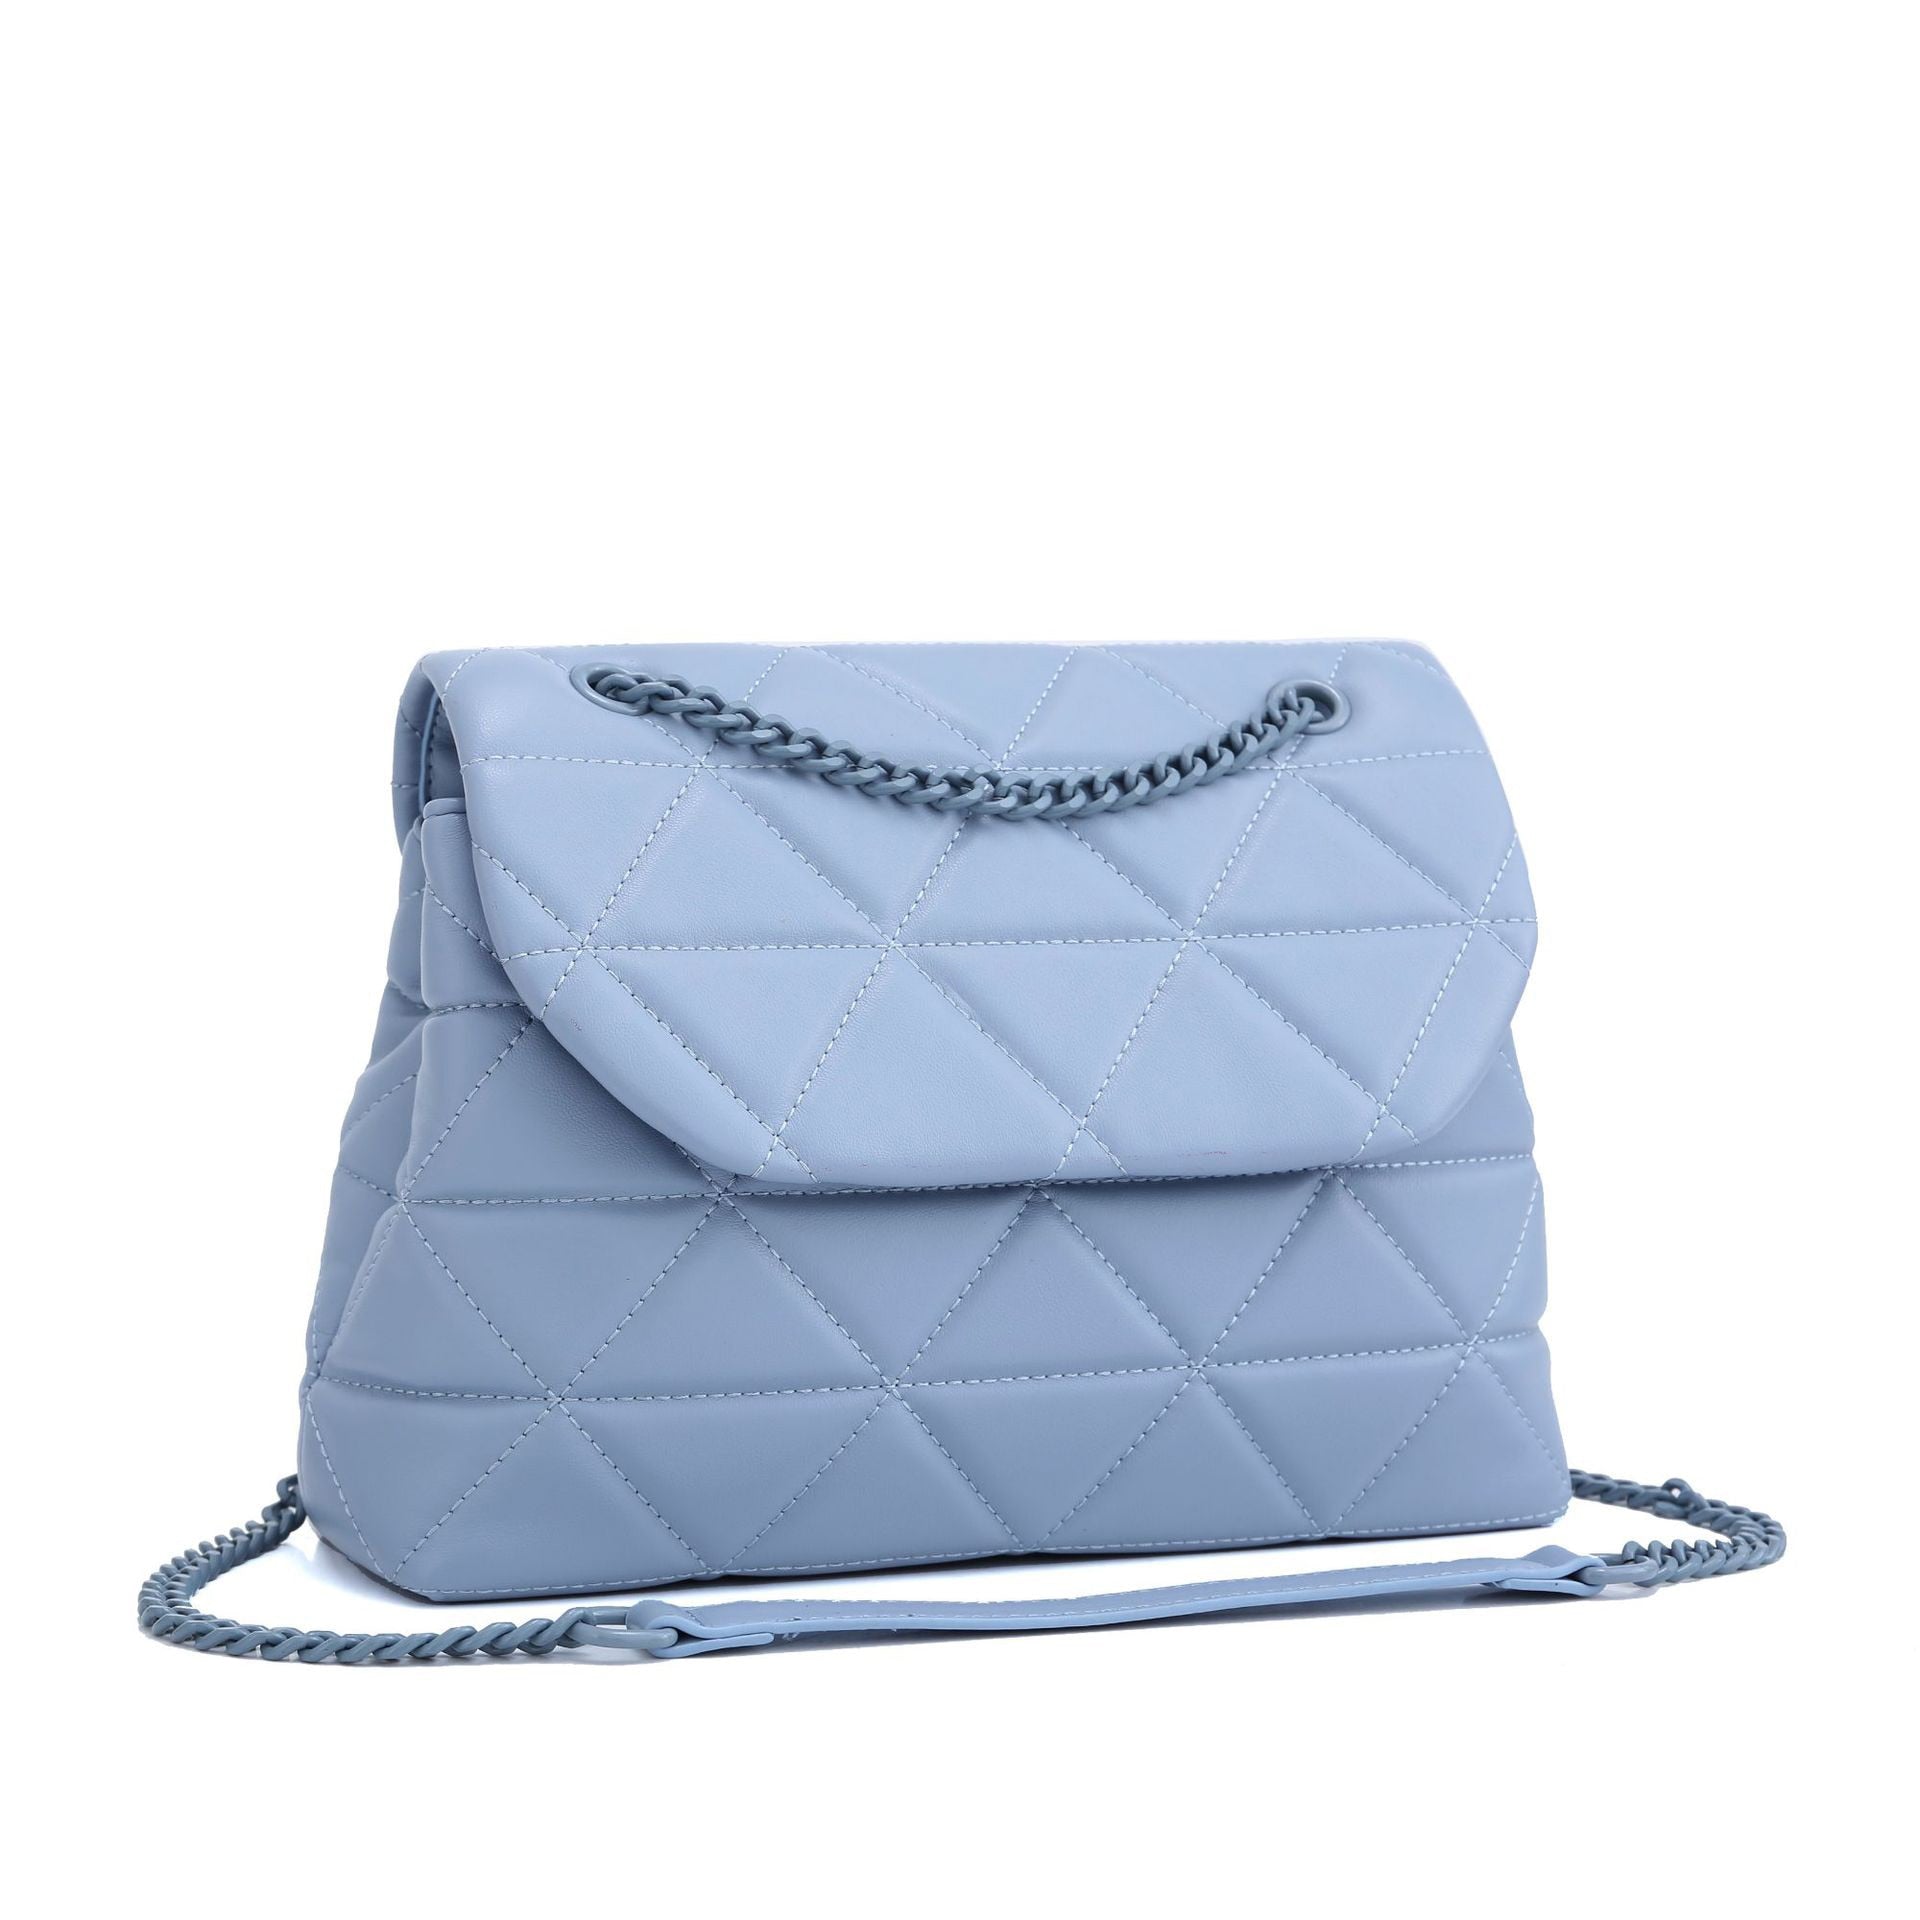 Christmas Gift Designer Bags Famous Brand For Women Handbags 2021 Fashion Shoulder Message Bags Leather Candy Color Chain Versatile Bucket Bag